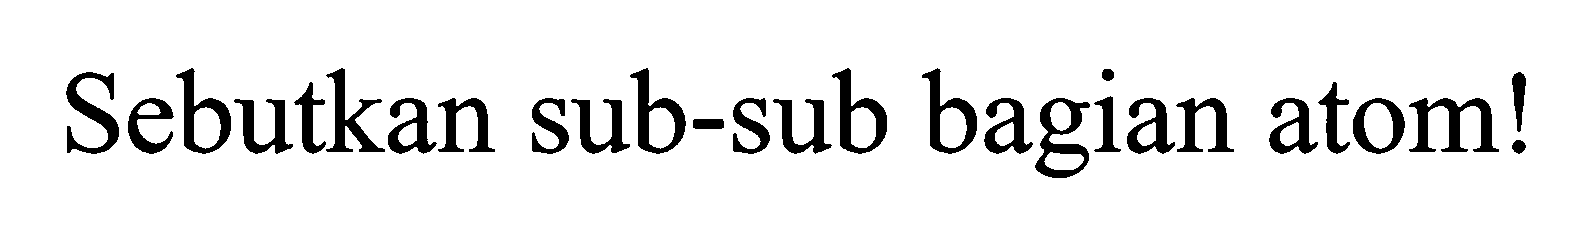 Sebutkan sub-sub bagian atom!